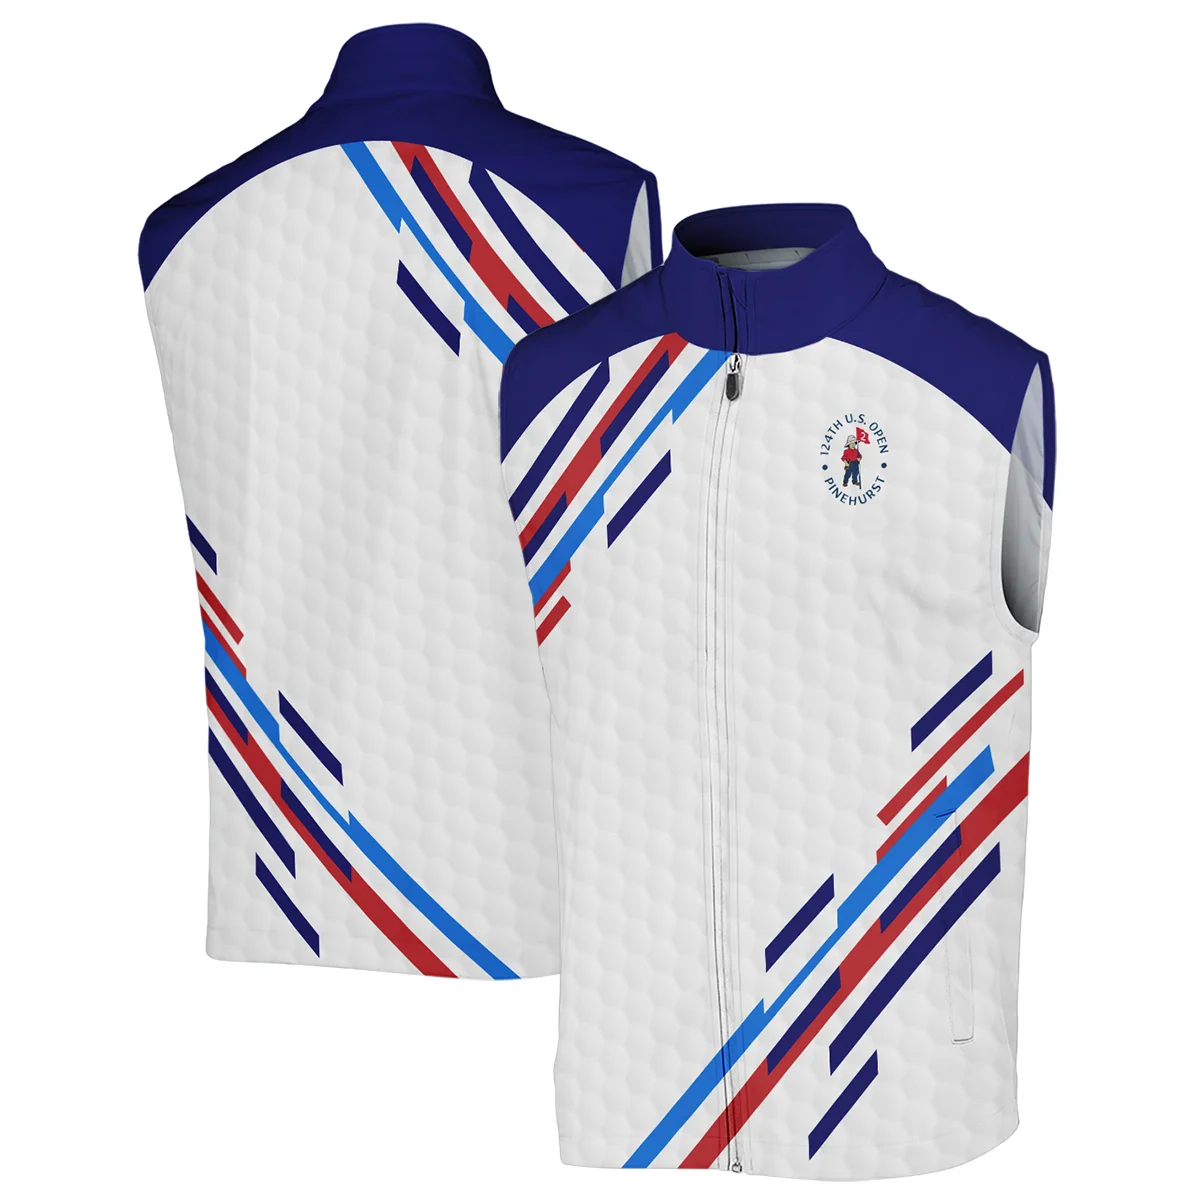 Golf Sport Callaway 124th U.S. Open Pinehurst Bomber Jacket Blue Red Golf Pattern White All Over Print Bomber Jacket